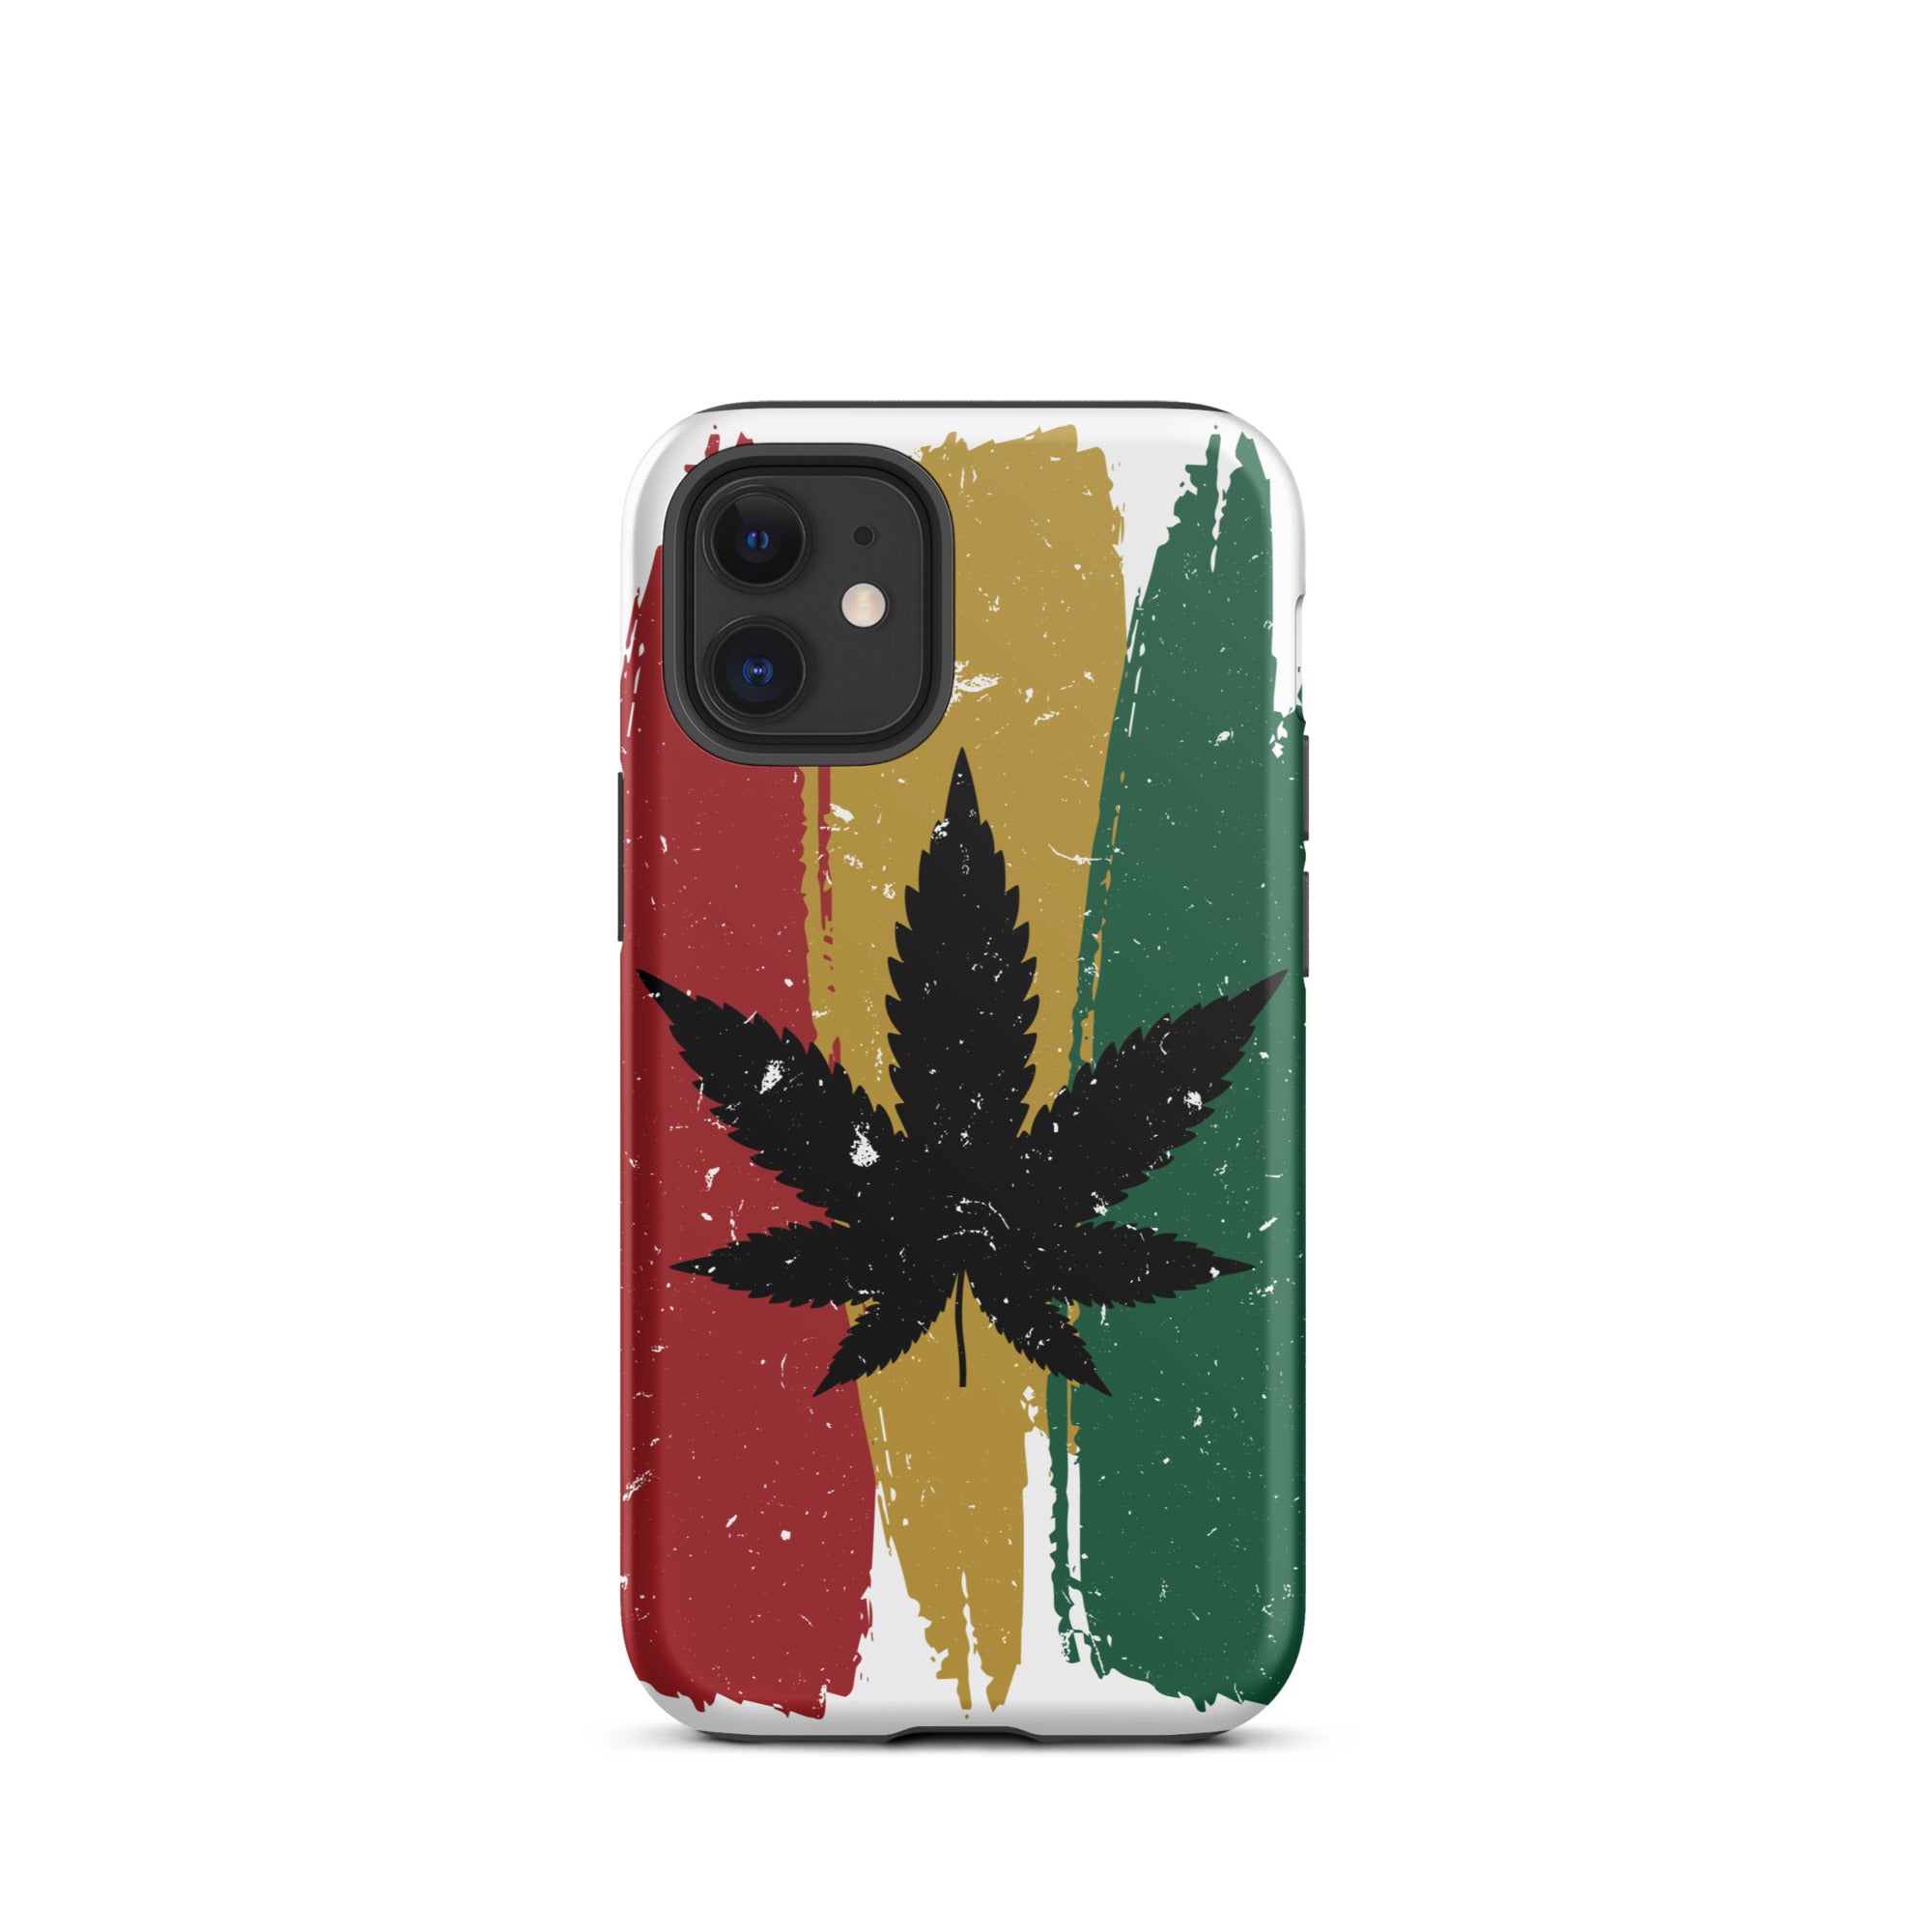 Leaf - Tough iPhone case